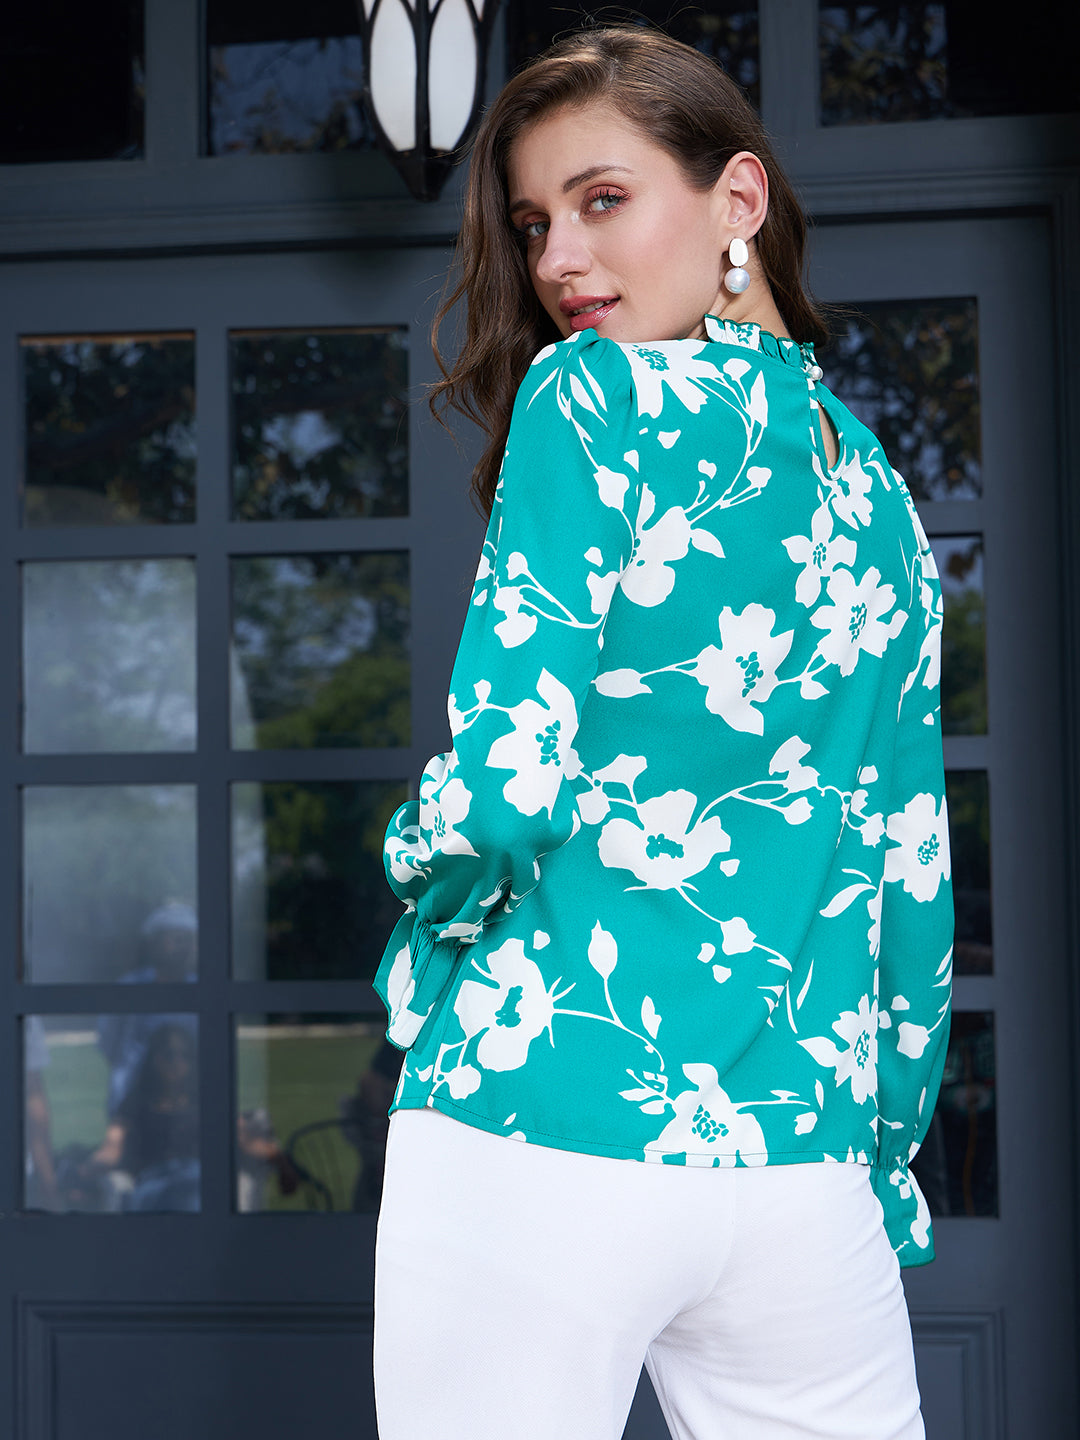 Crepe Floral Print Ladies Bell Sleeves Floral Design Top, Size: XS